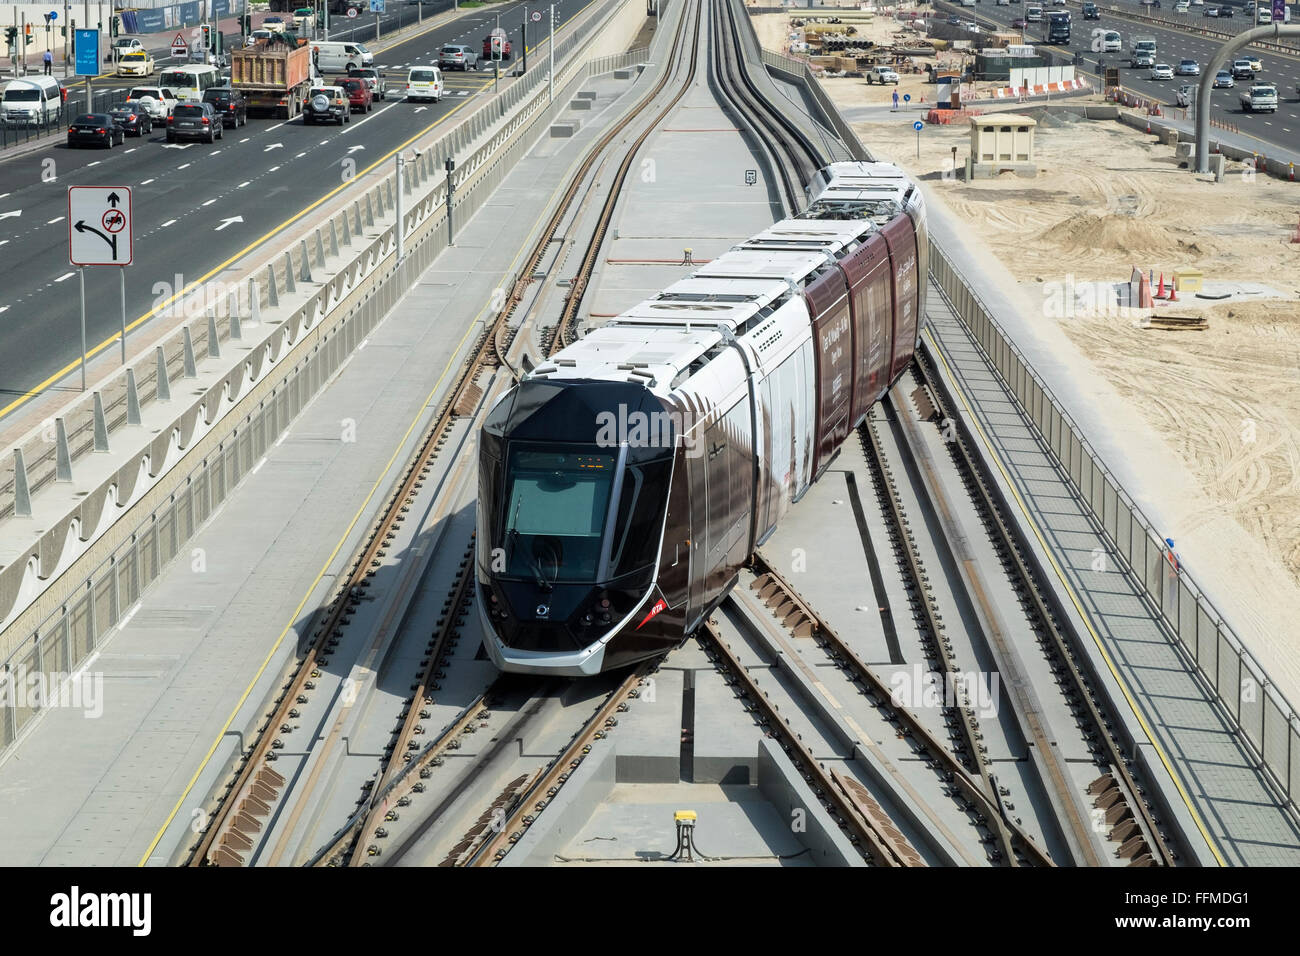 View of Dubai Tram system in United Arab Emirates Stock Photo